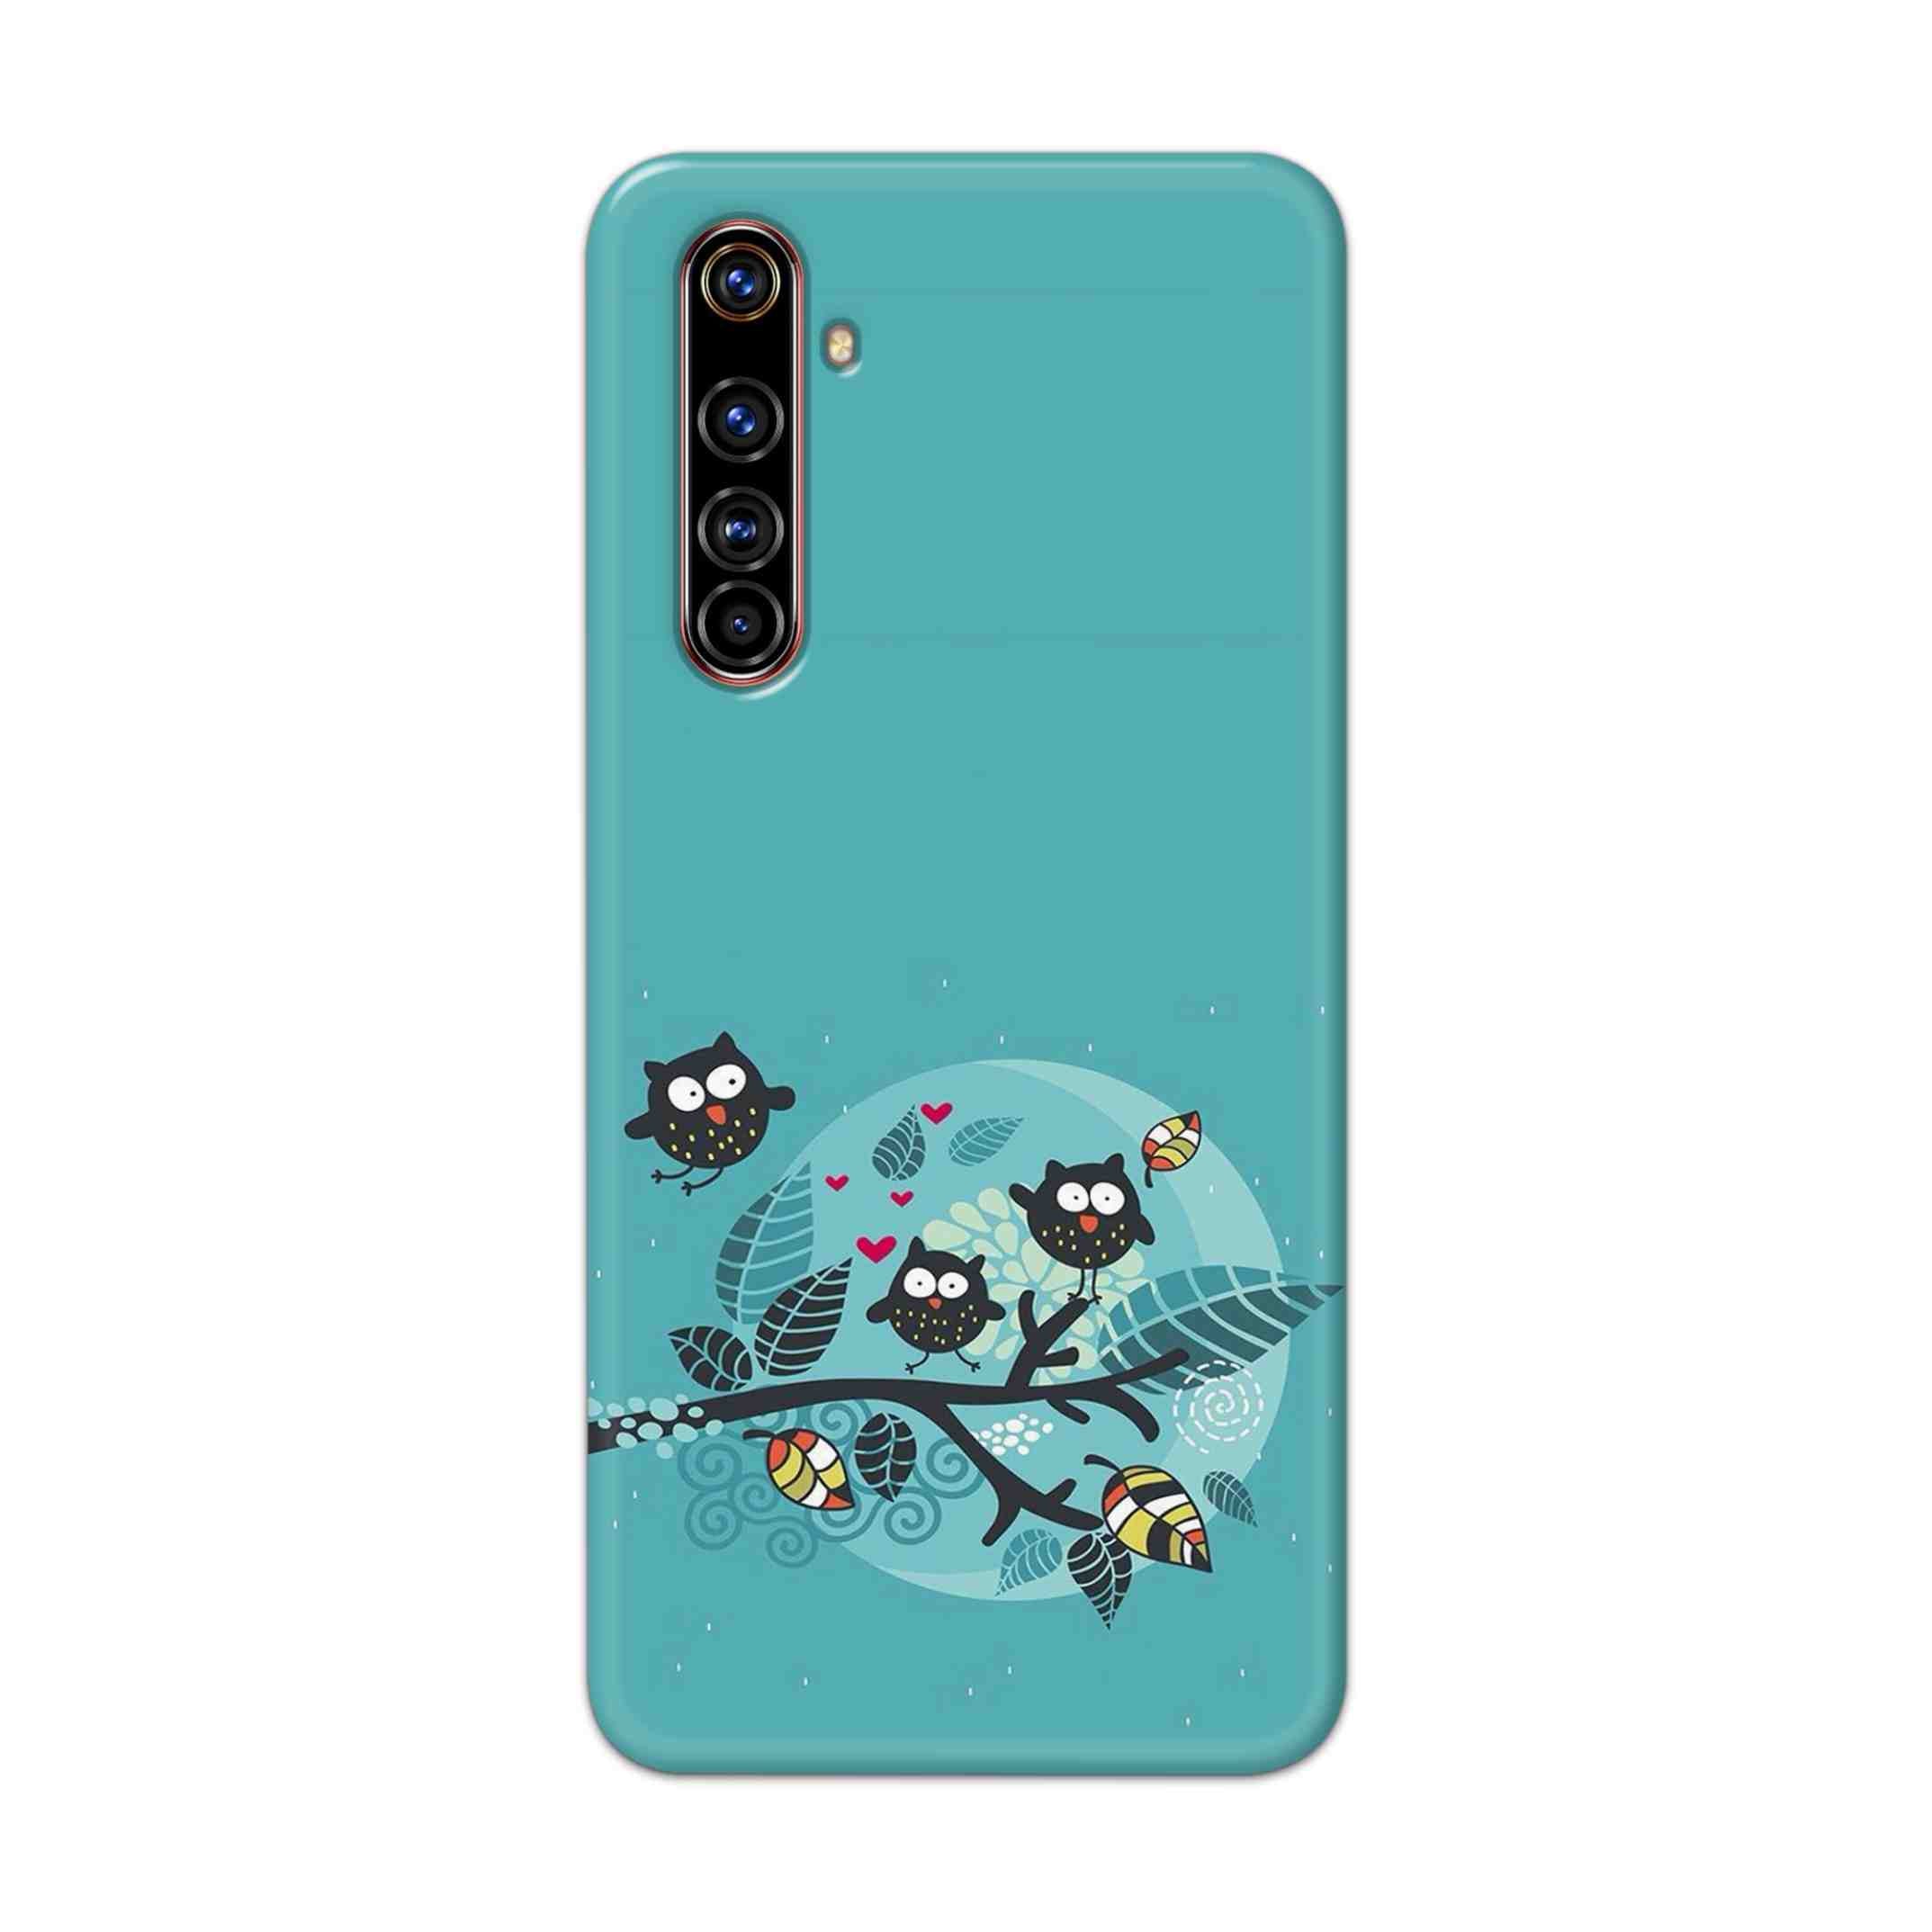 Buy Owl Hard Back Mobile Phone Case Cover For Realme X50 Pro Online